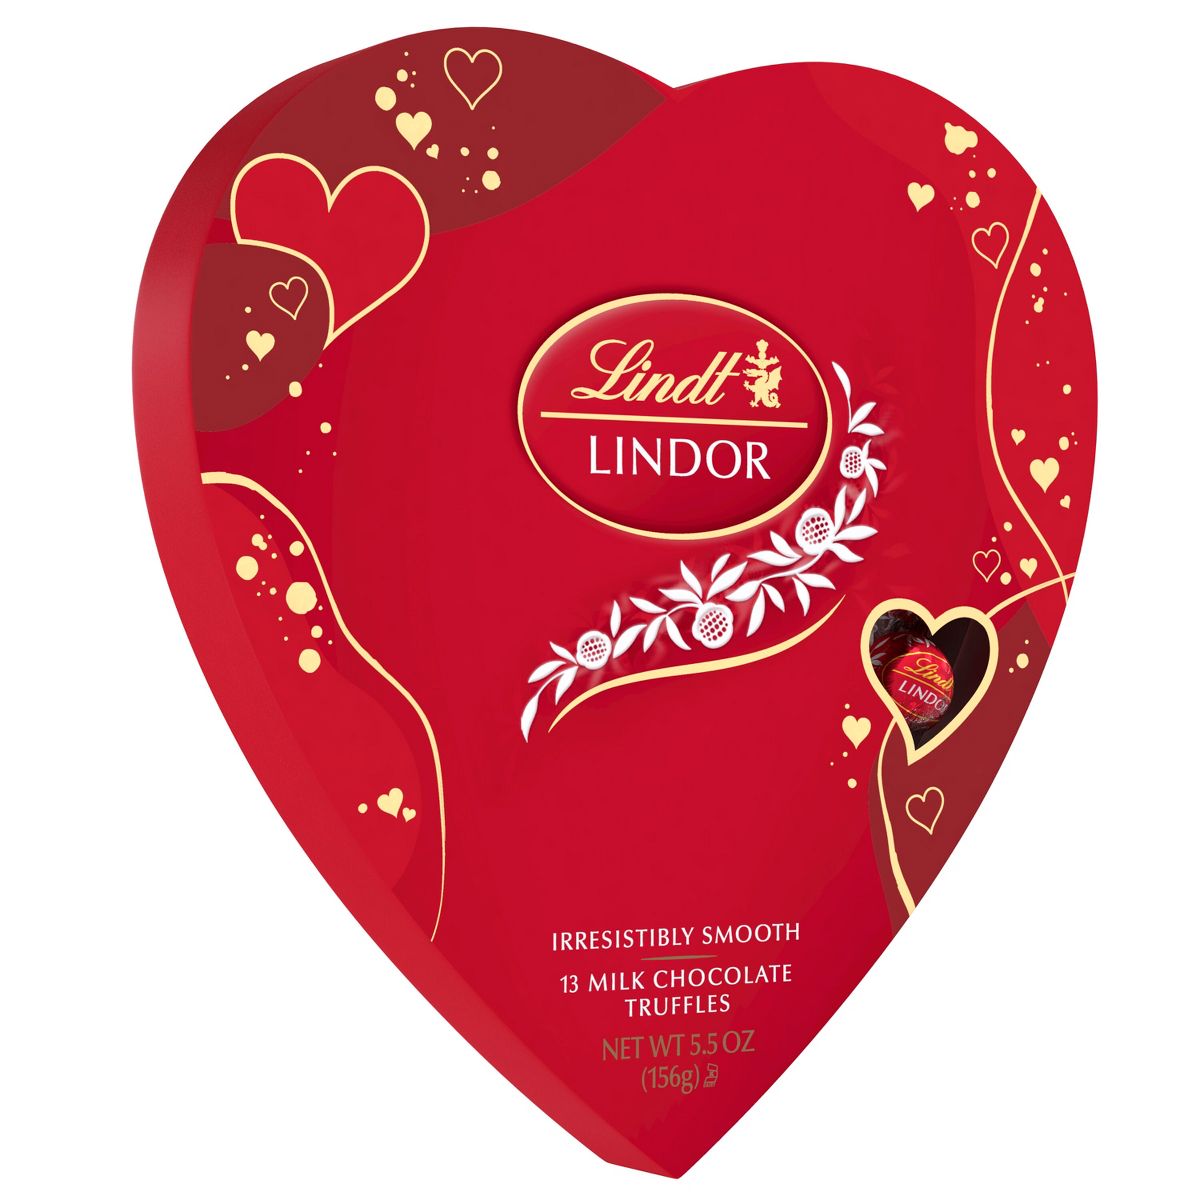 LINDT LINDOR MILK CHOCOLATE TRUFFLES 5.5 OZ HEART BOX